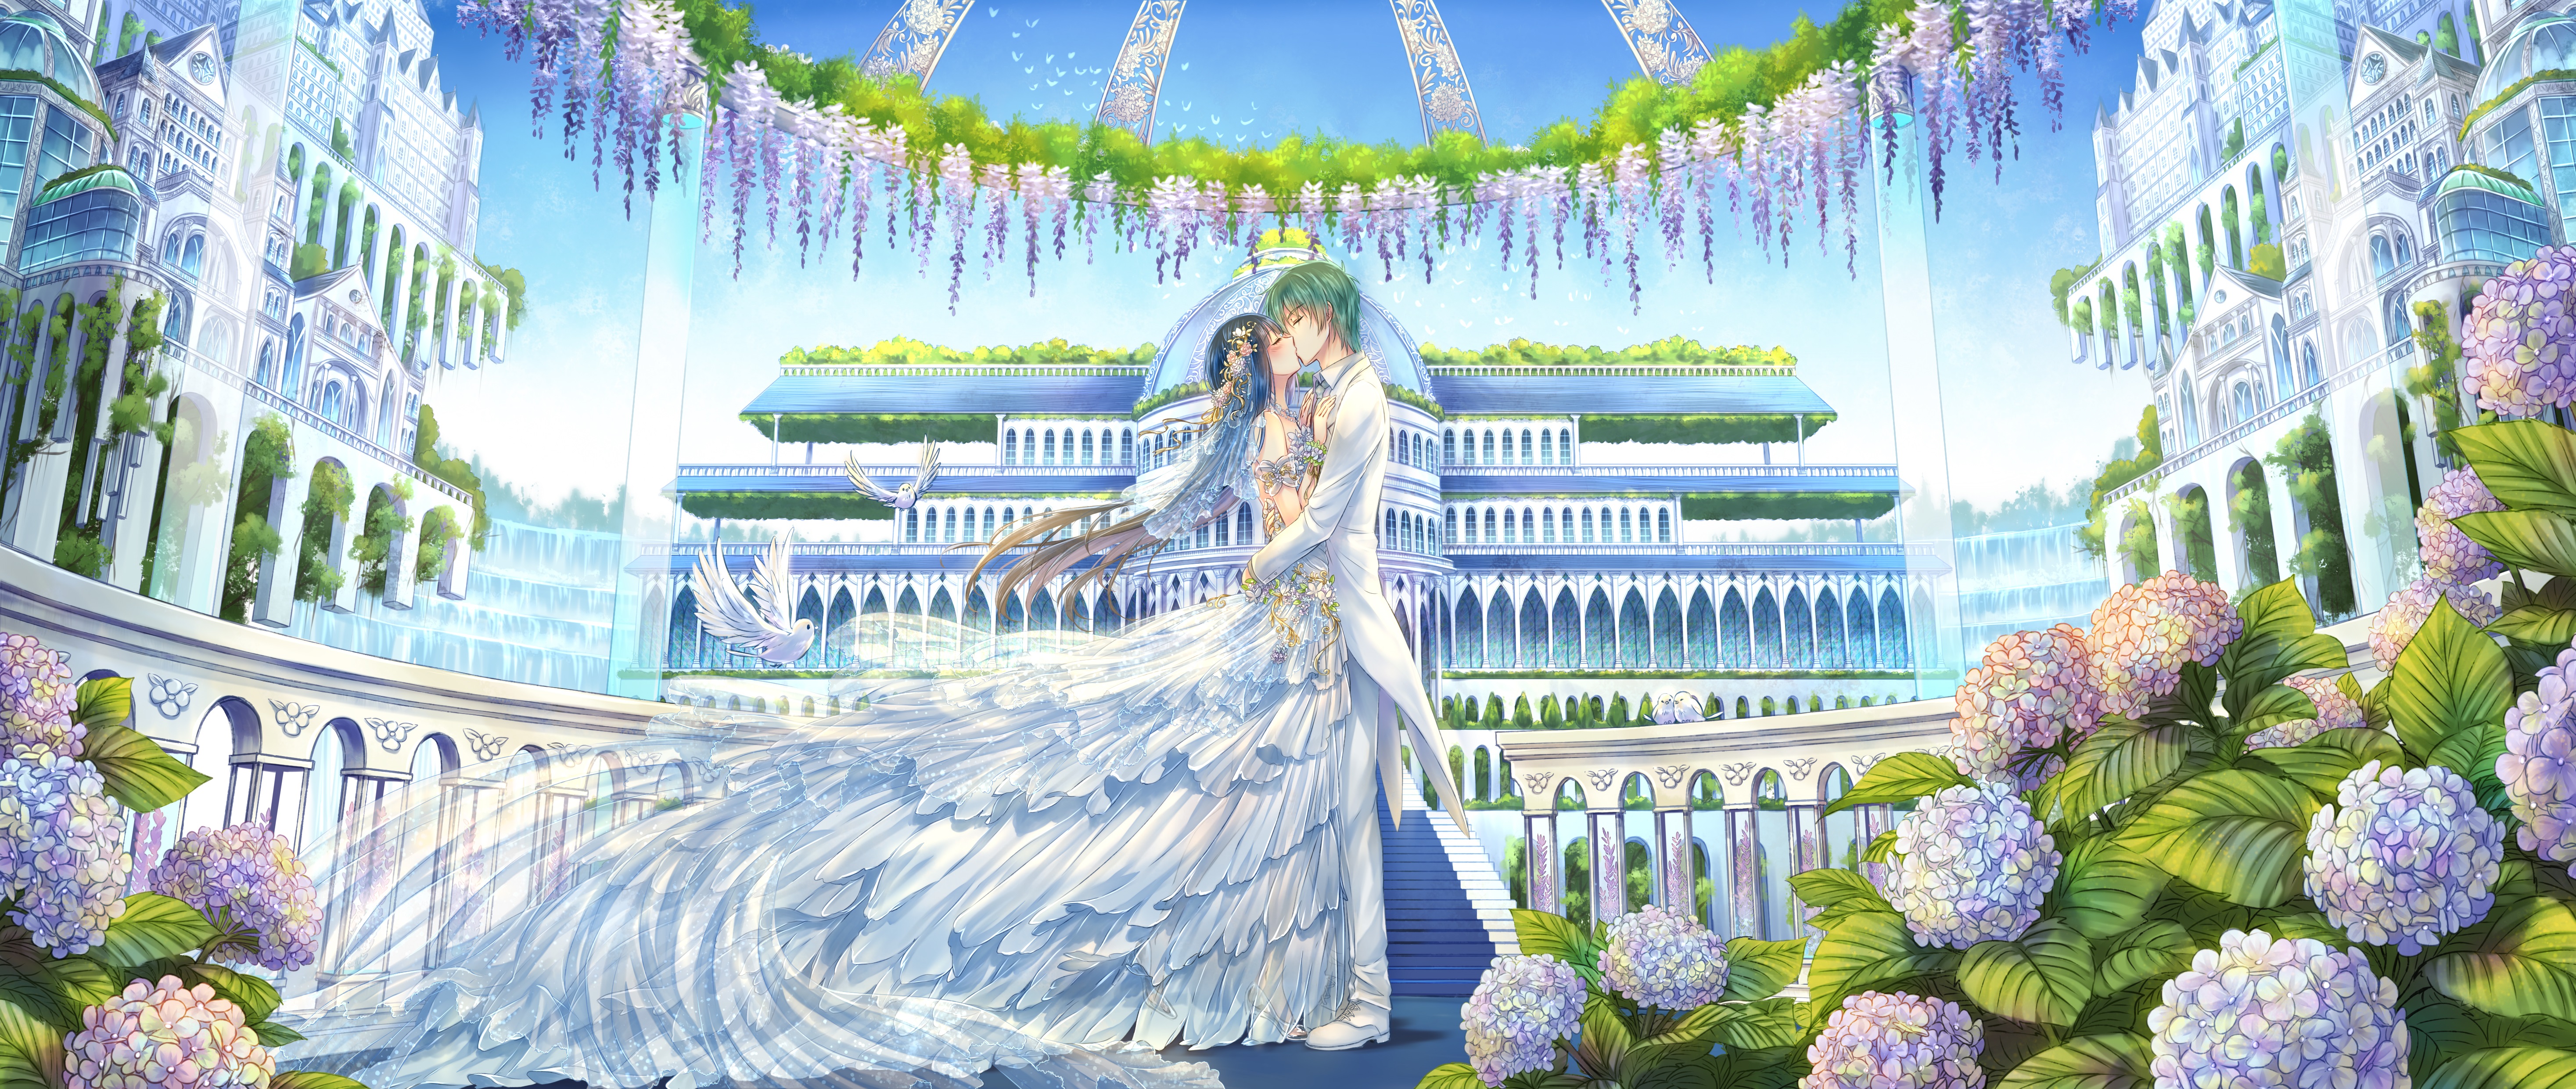 Starry Night Palace | Anime background, Fantasy art landscapes, Episode  interactive backgrounds